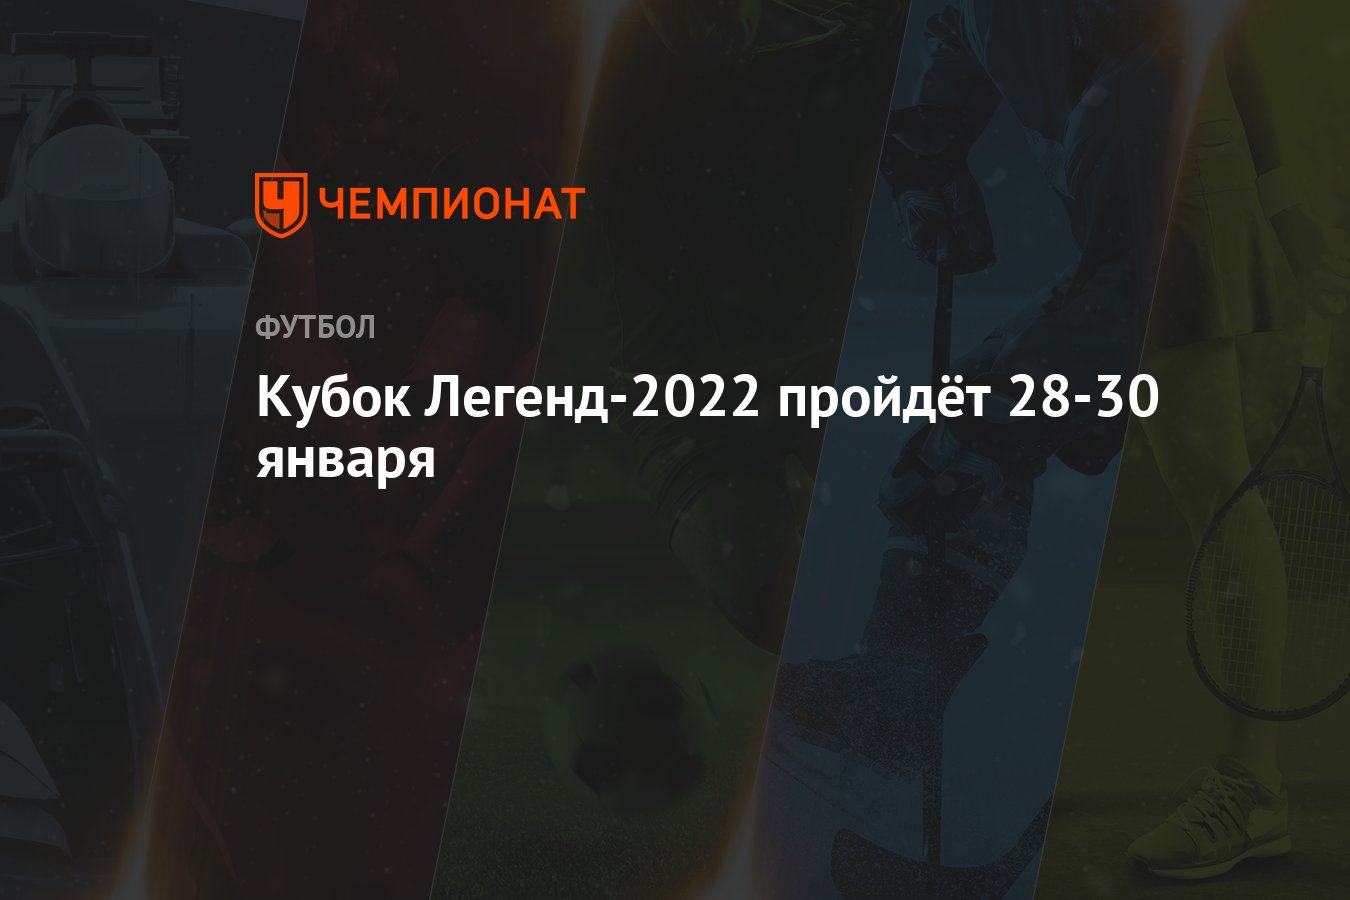 Легендарный 2022. Кубок легенд 2022. Легенды 2022 года. Мифы 2022 года. Кубок будущих легенд 2022.